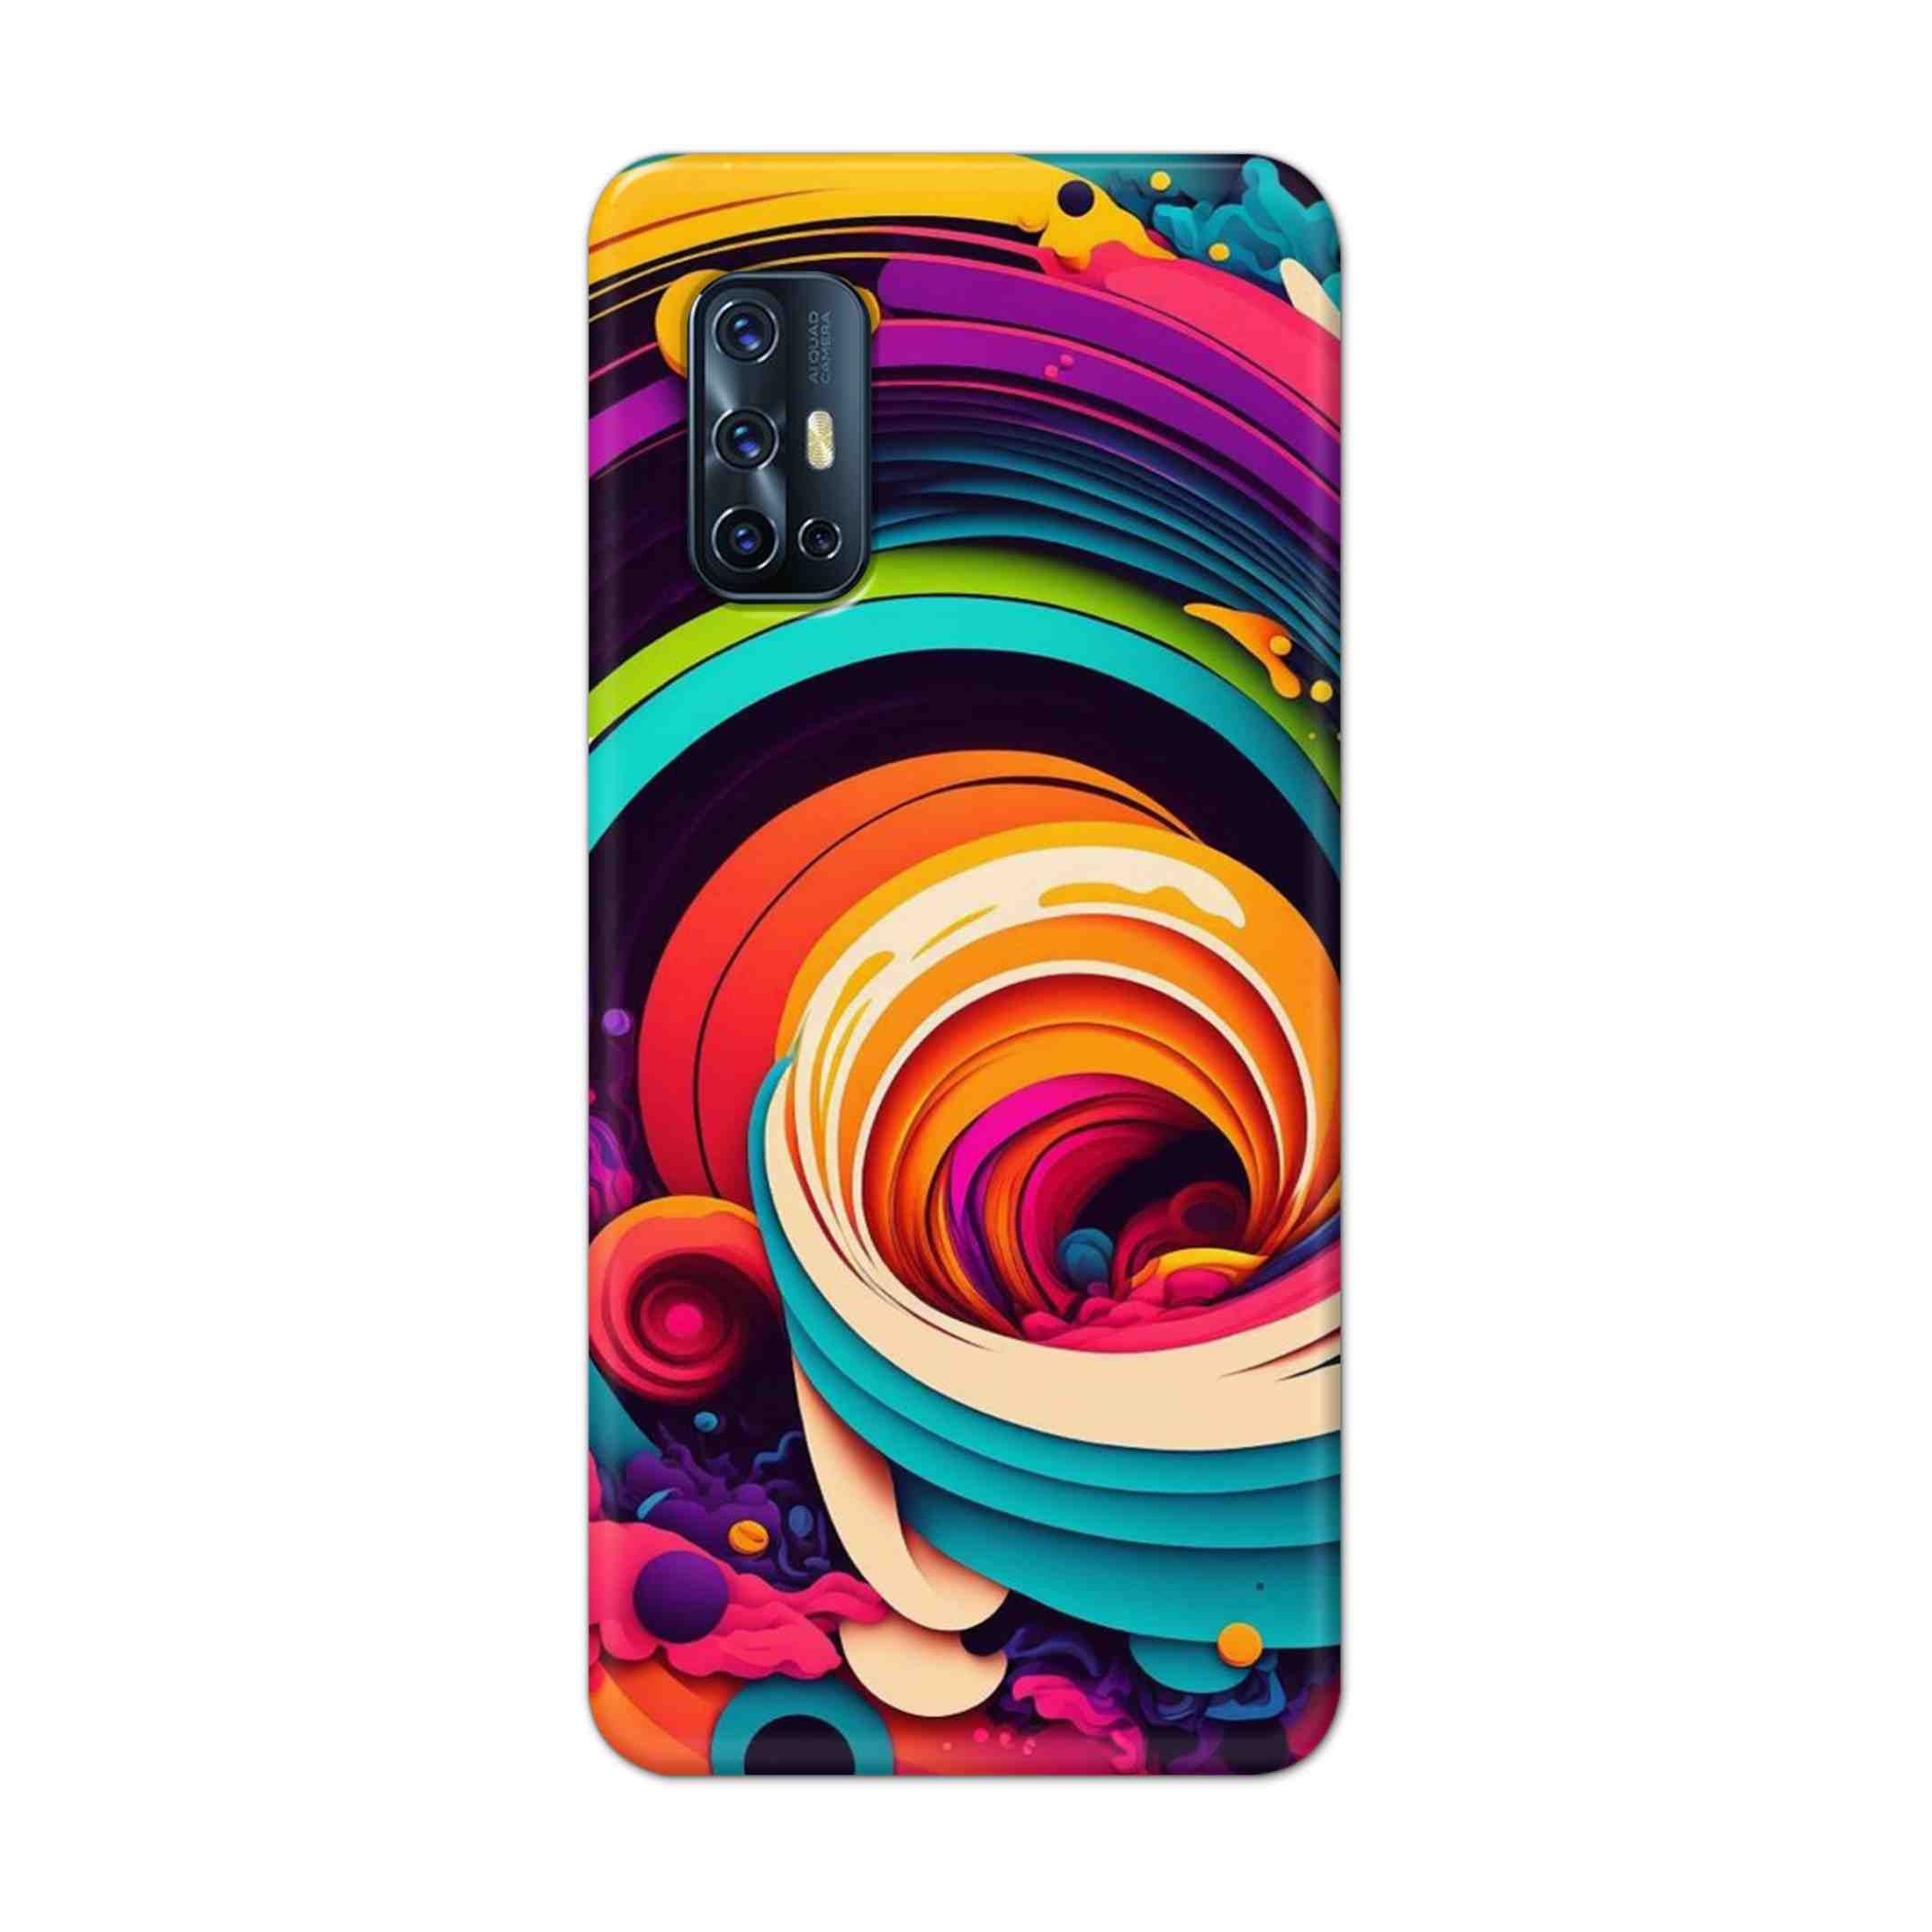 Buy Colour Circle Hard Back Mobile Phone Case Cover For Vivo V17 Online